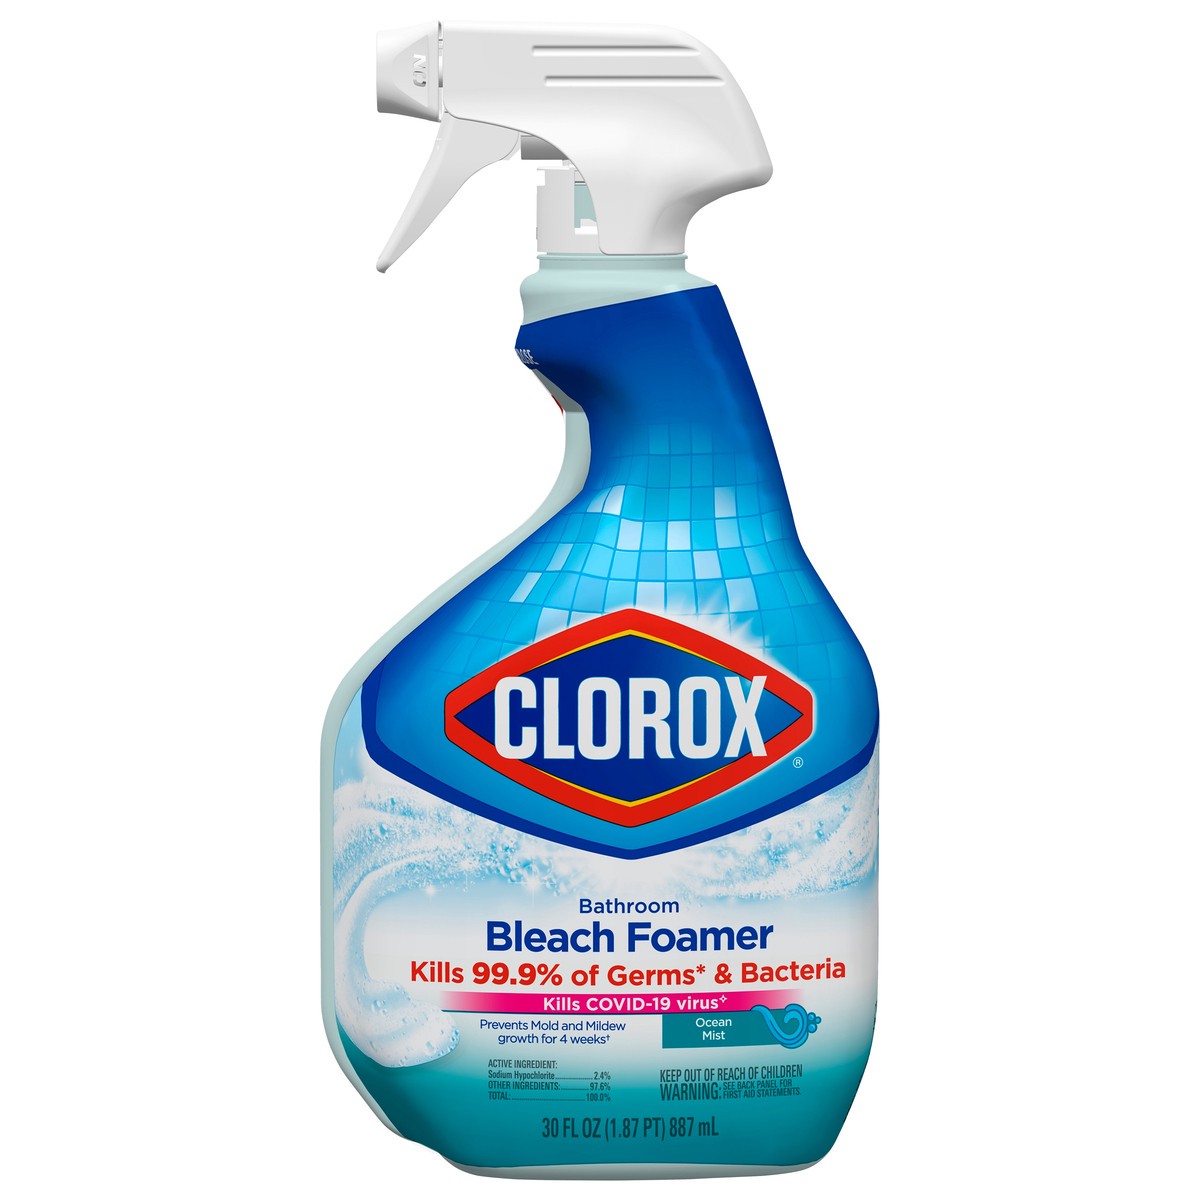 slide 1 of 87, Clorox Ocean Mist Bathroom Bleach Foamer 30 fl oz, 30 fl oz